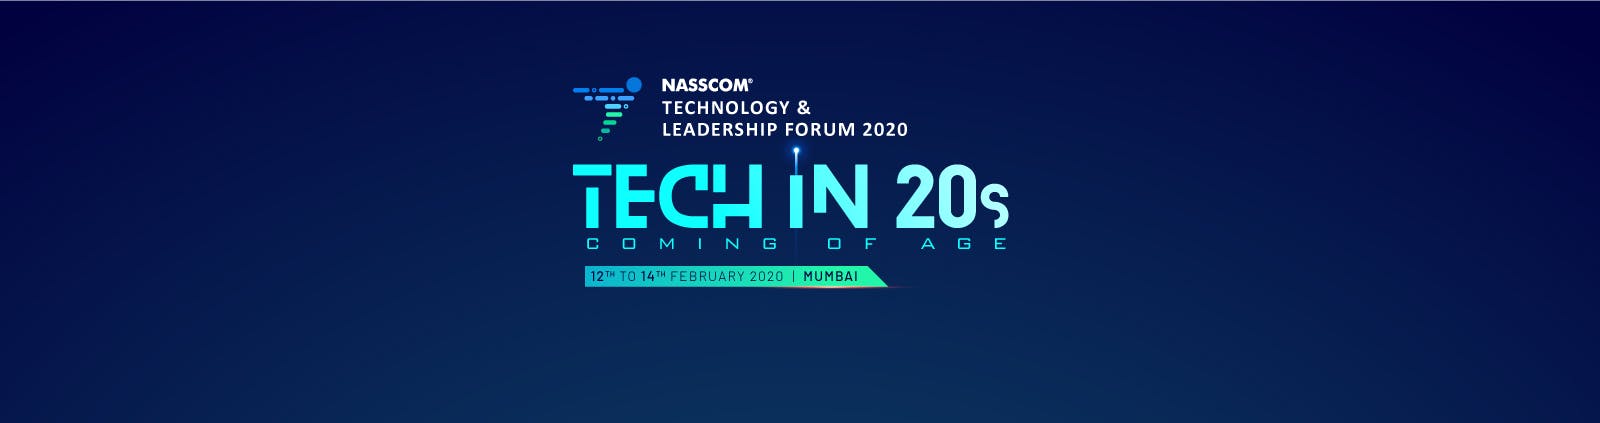 GeekyAnts @ NASSCOM Technology & Leadership Forum 2020, Mumbai.